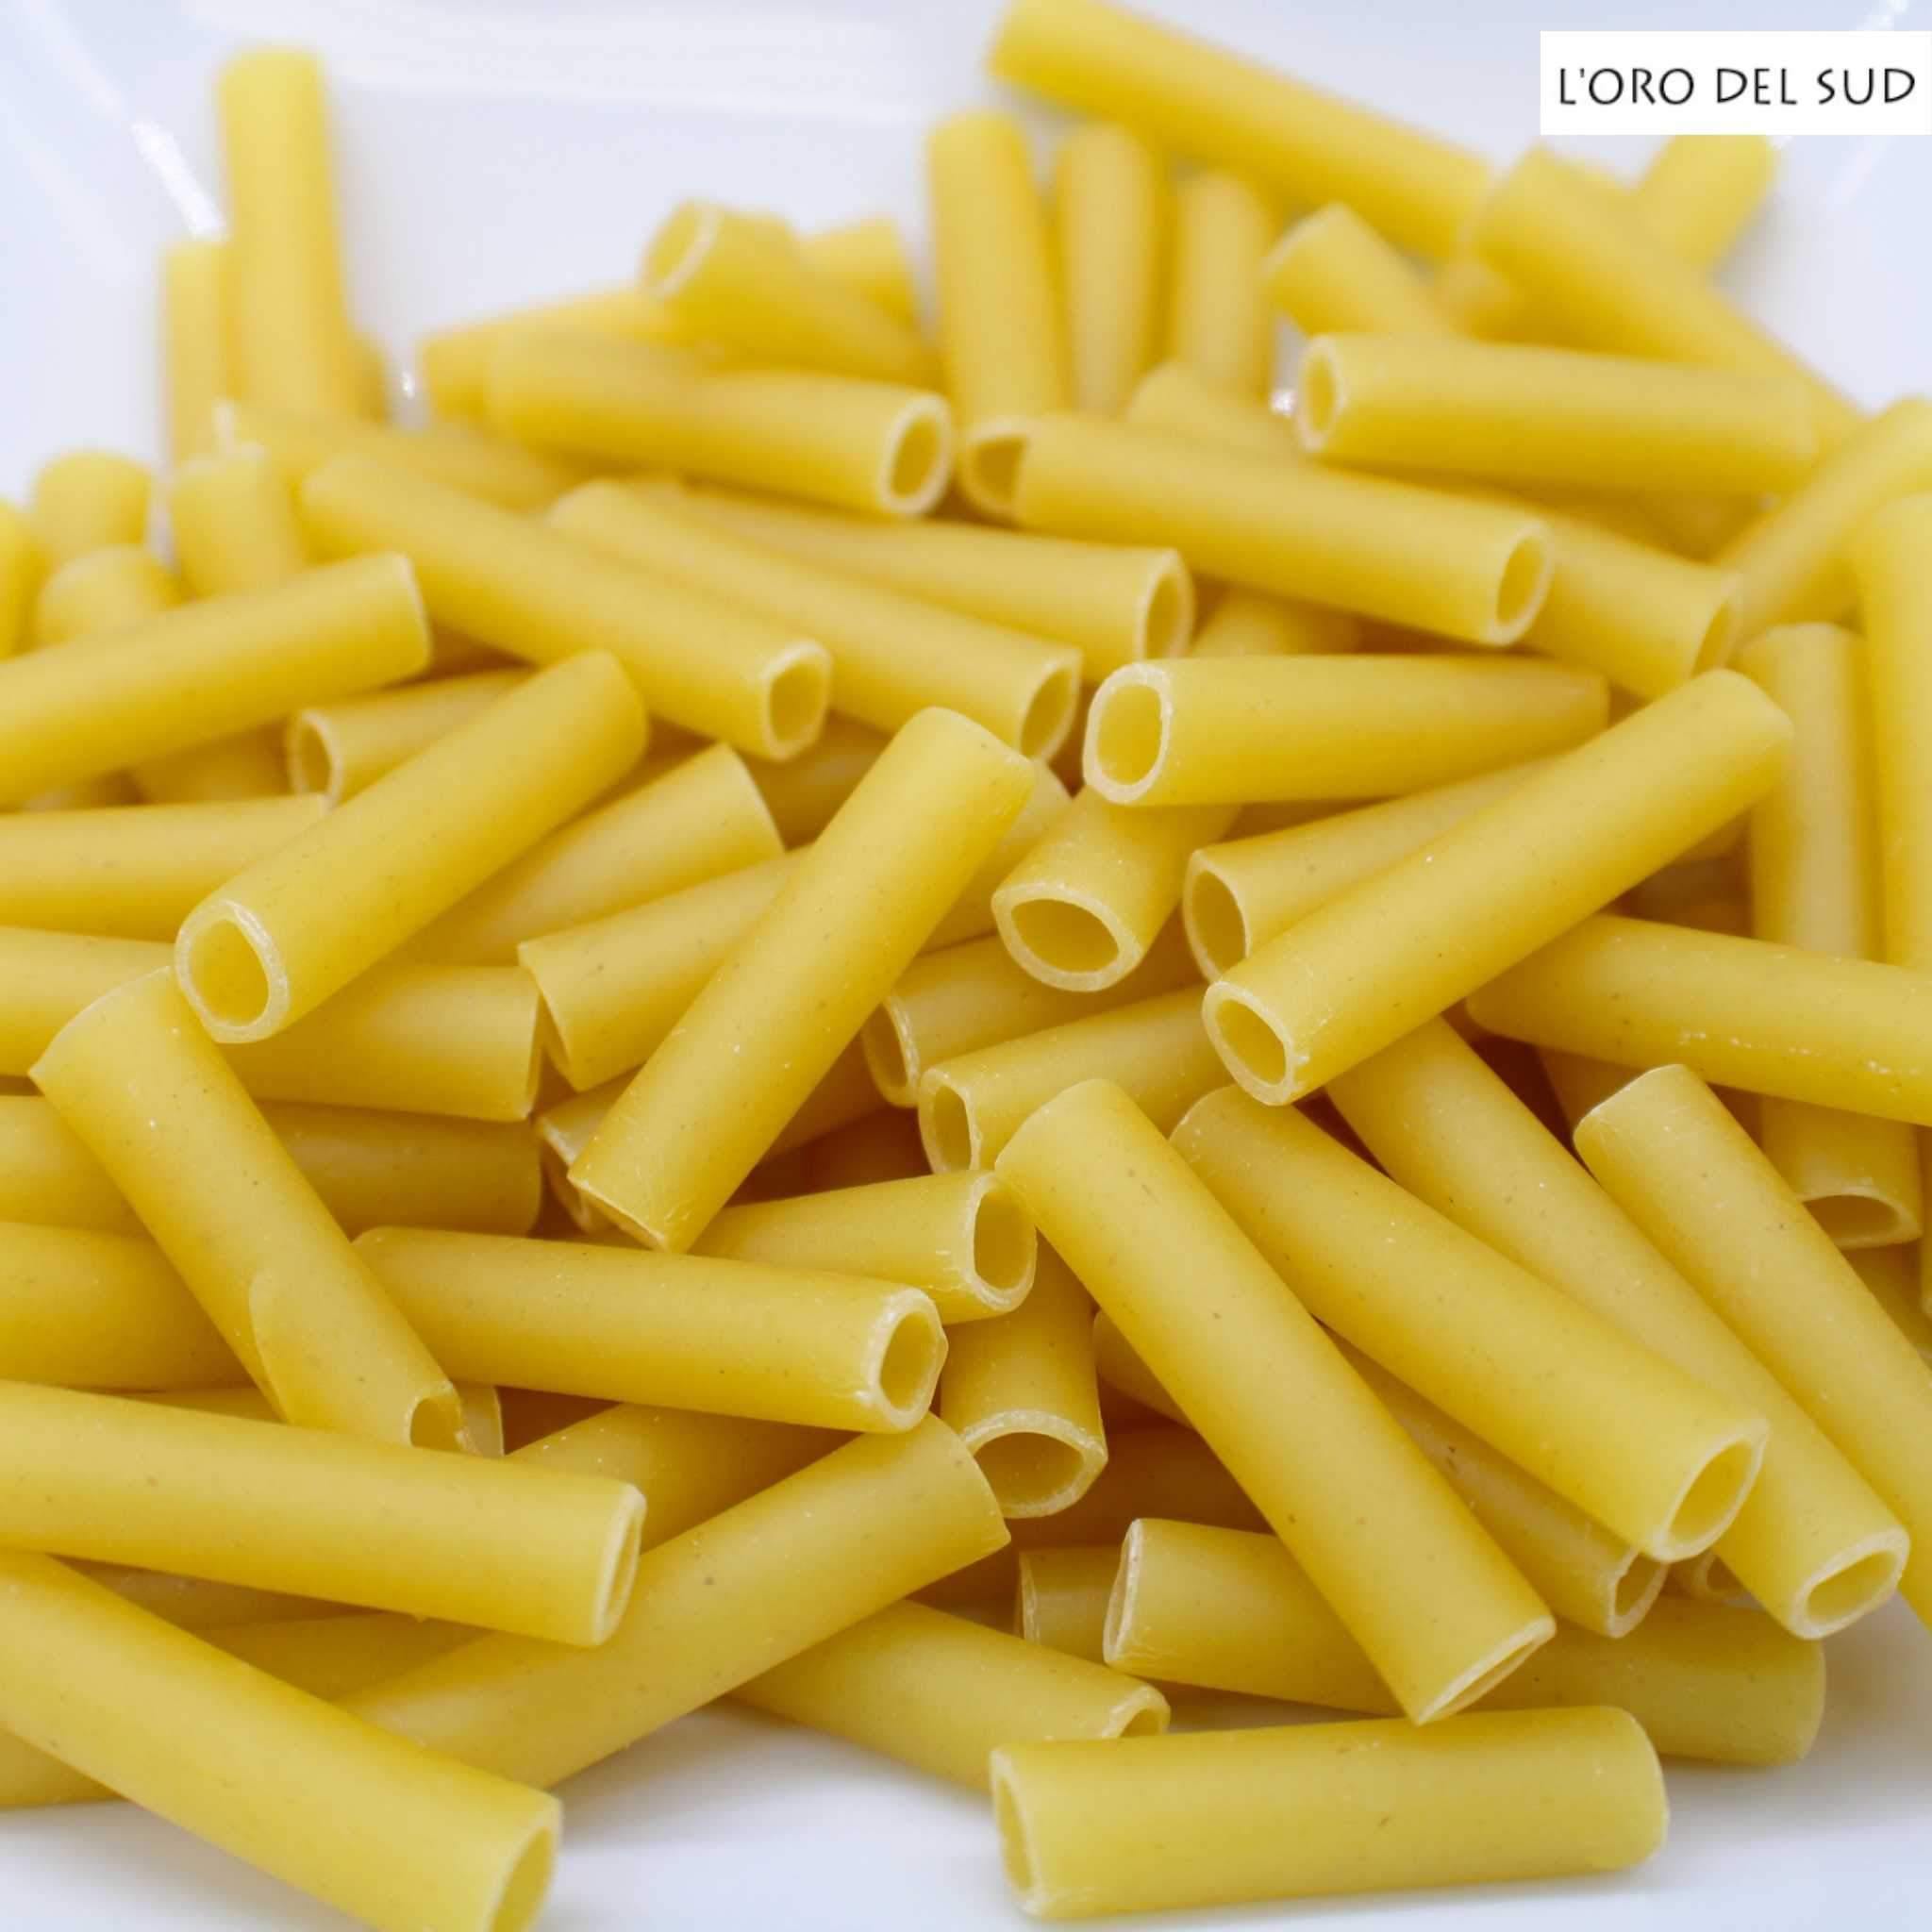 L'Oro Del Sud Cut Ziti Pasta 1 lb. Bag - Wholesale Italian Food